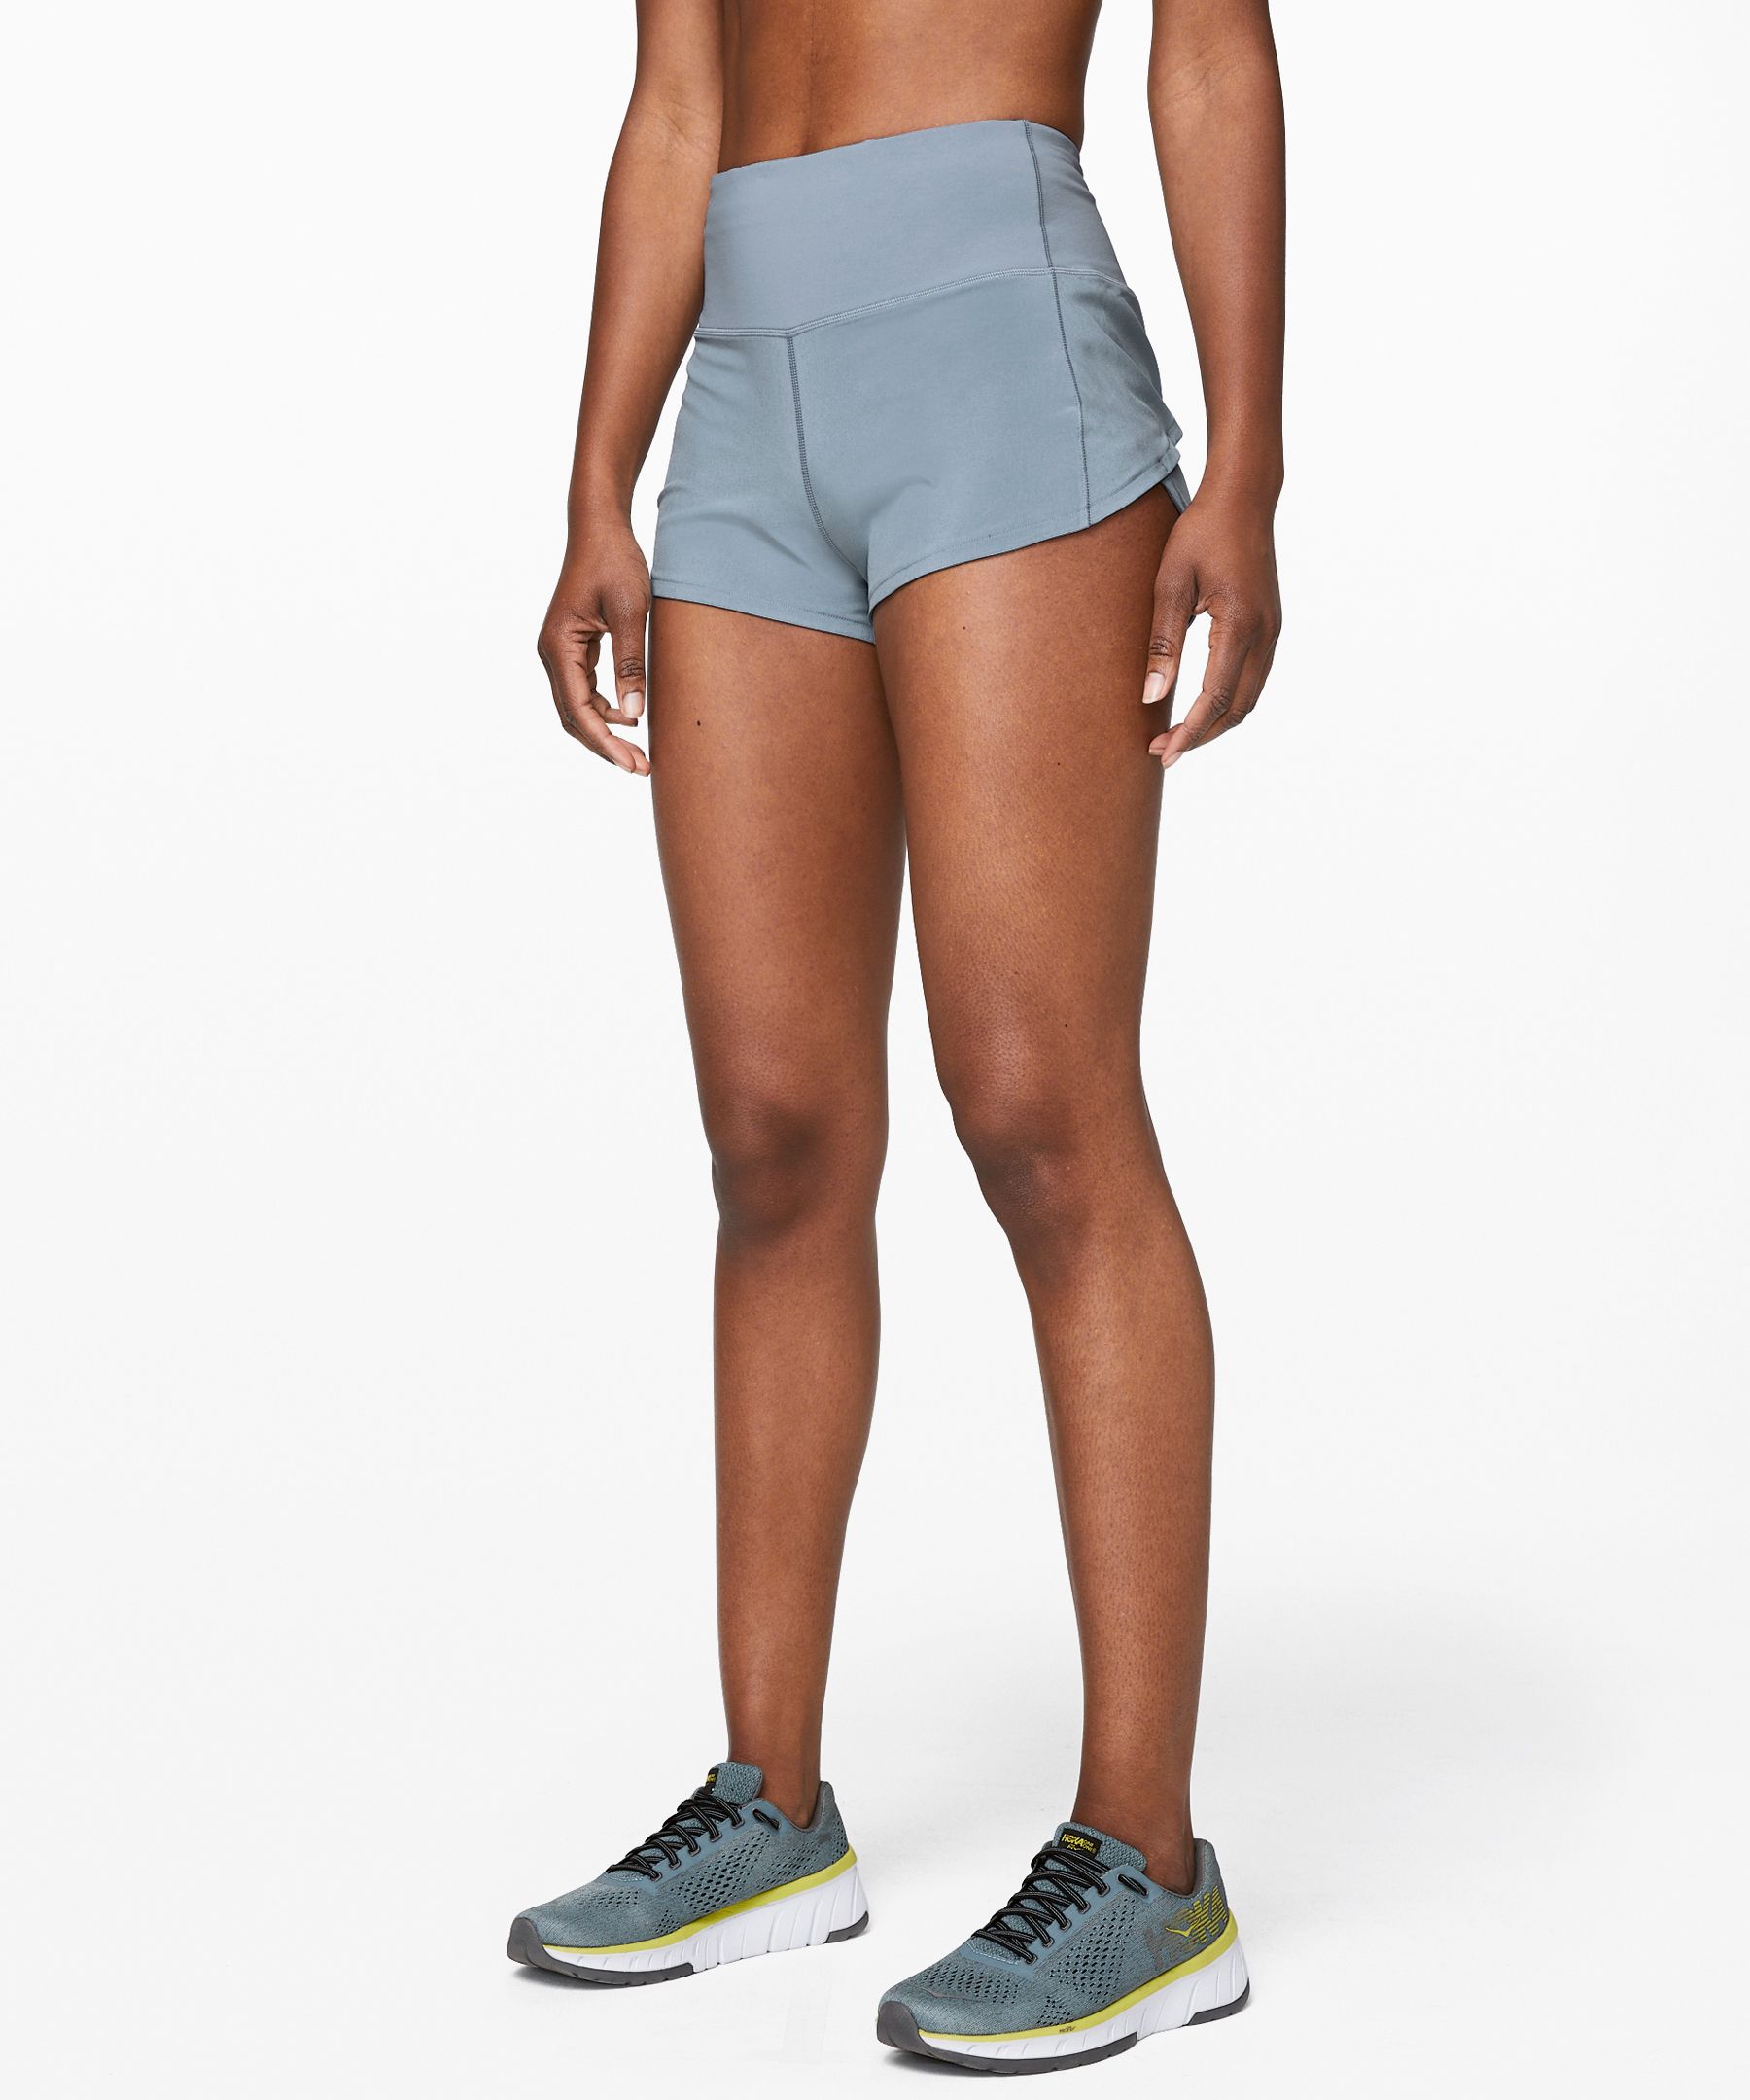 Lululemon athletica Speed Up High-Rise Lined Short 2.5, Women's Shorts